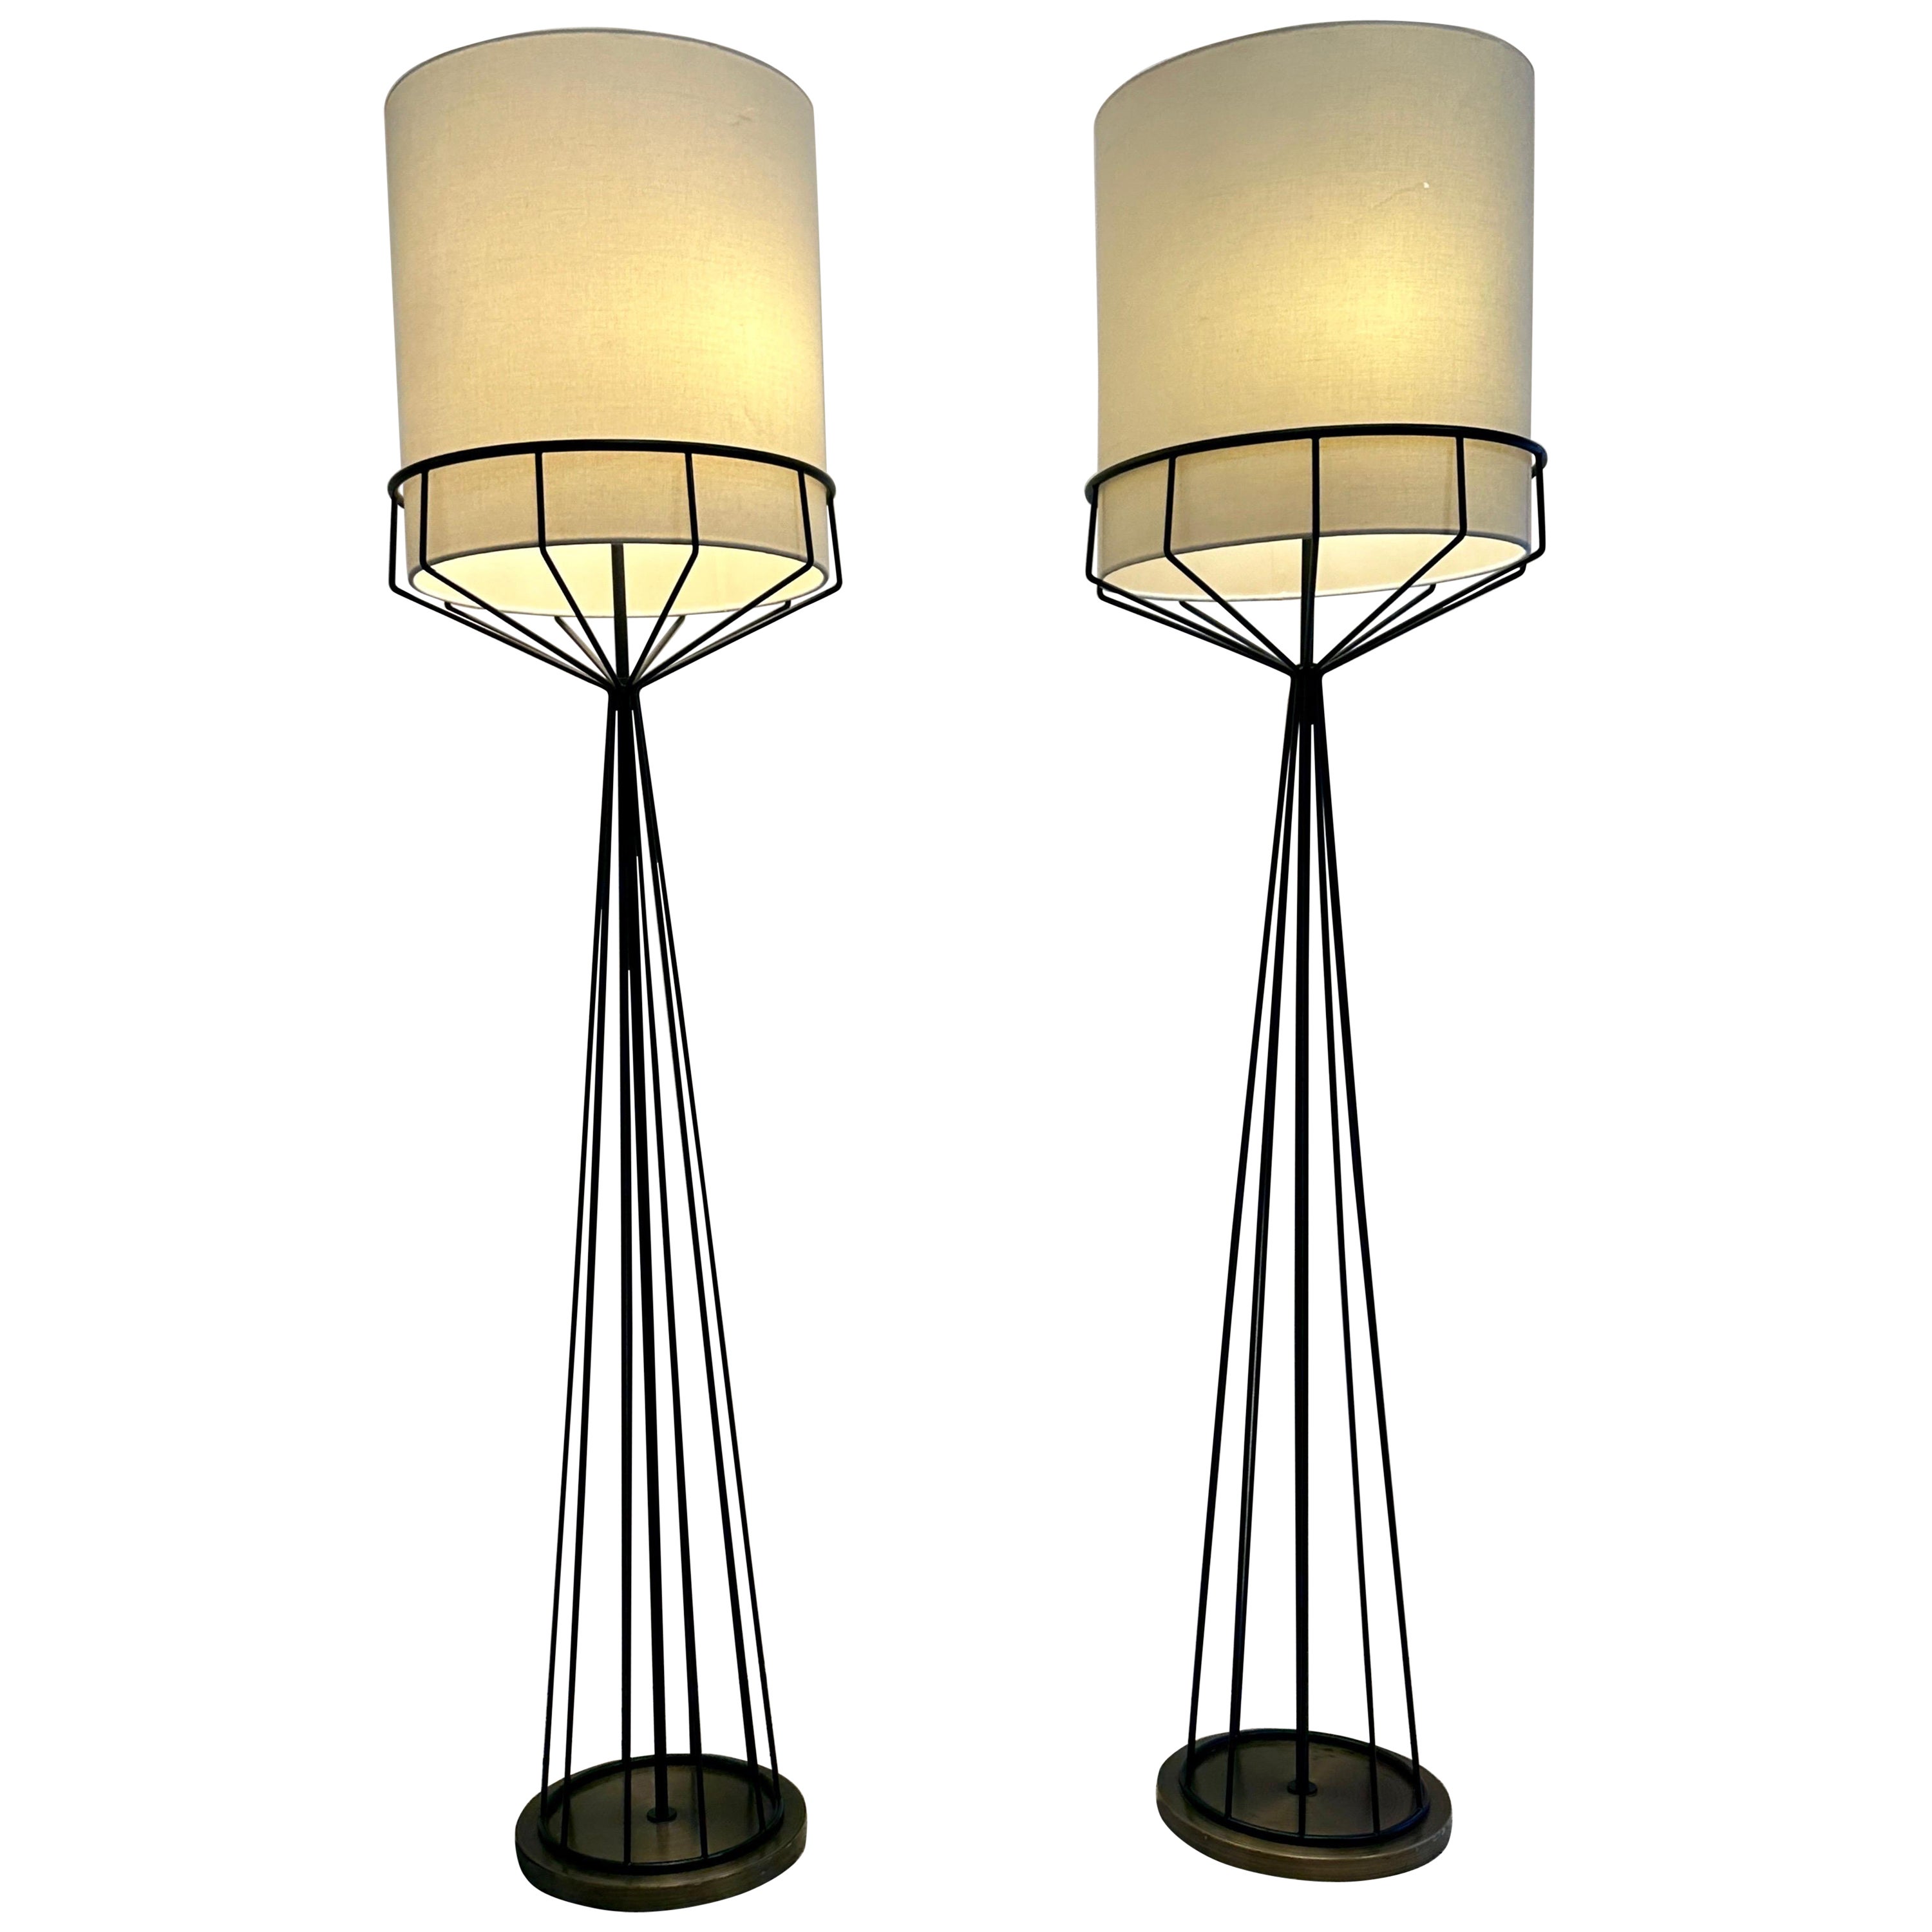 Pair of Tony Paul Designed Metal Floor Lamps, 1990's For Sale